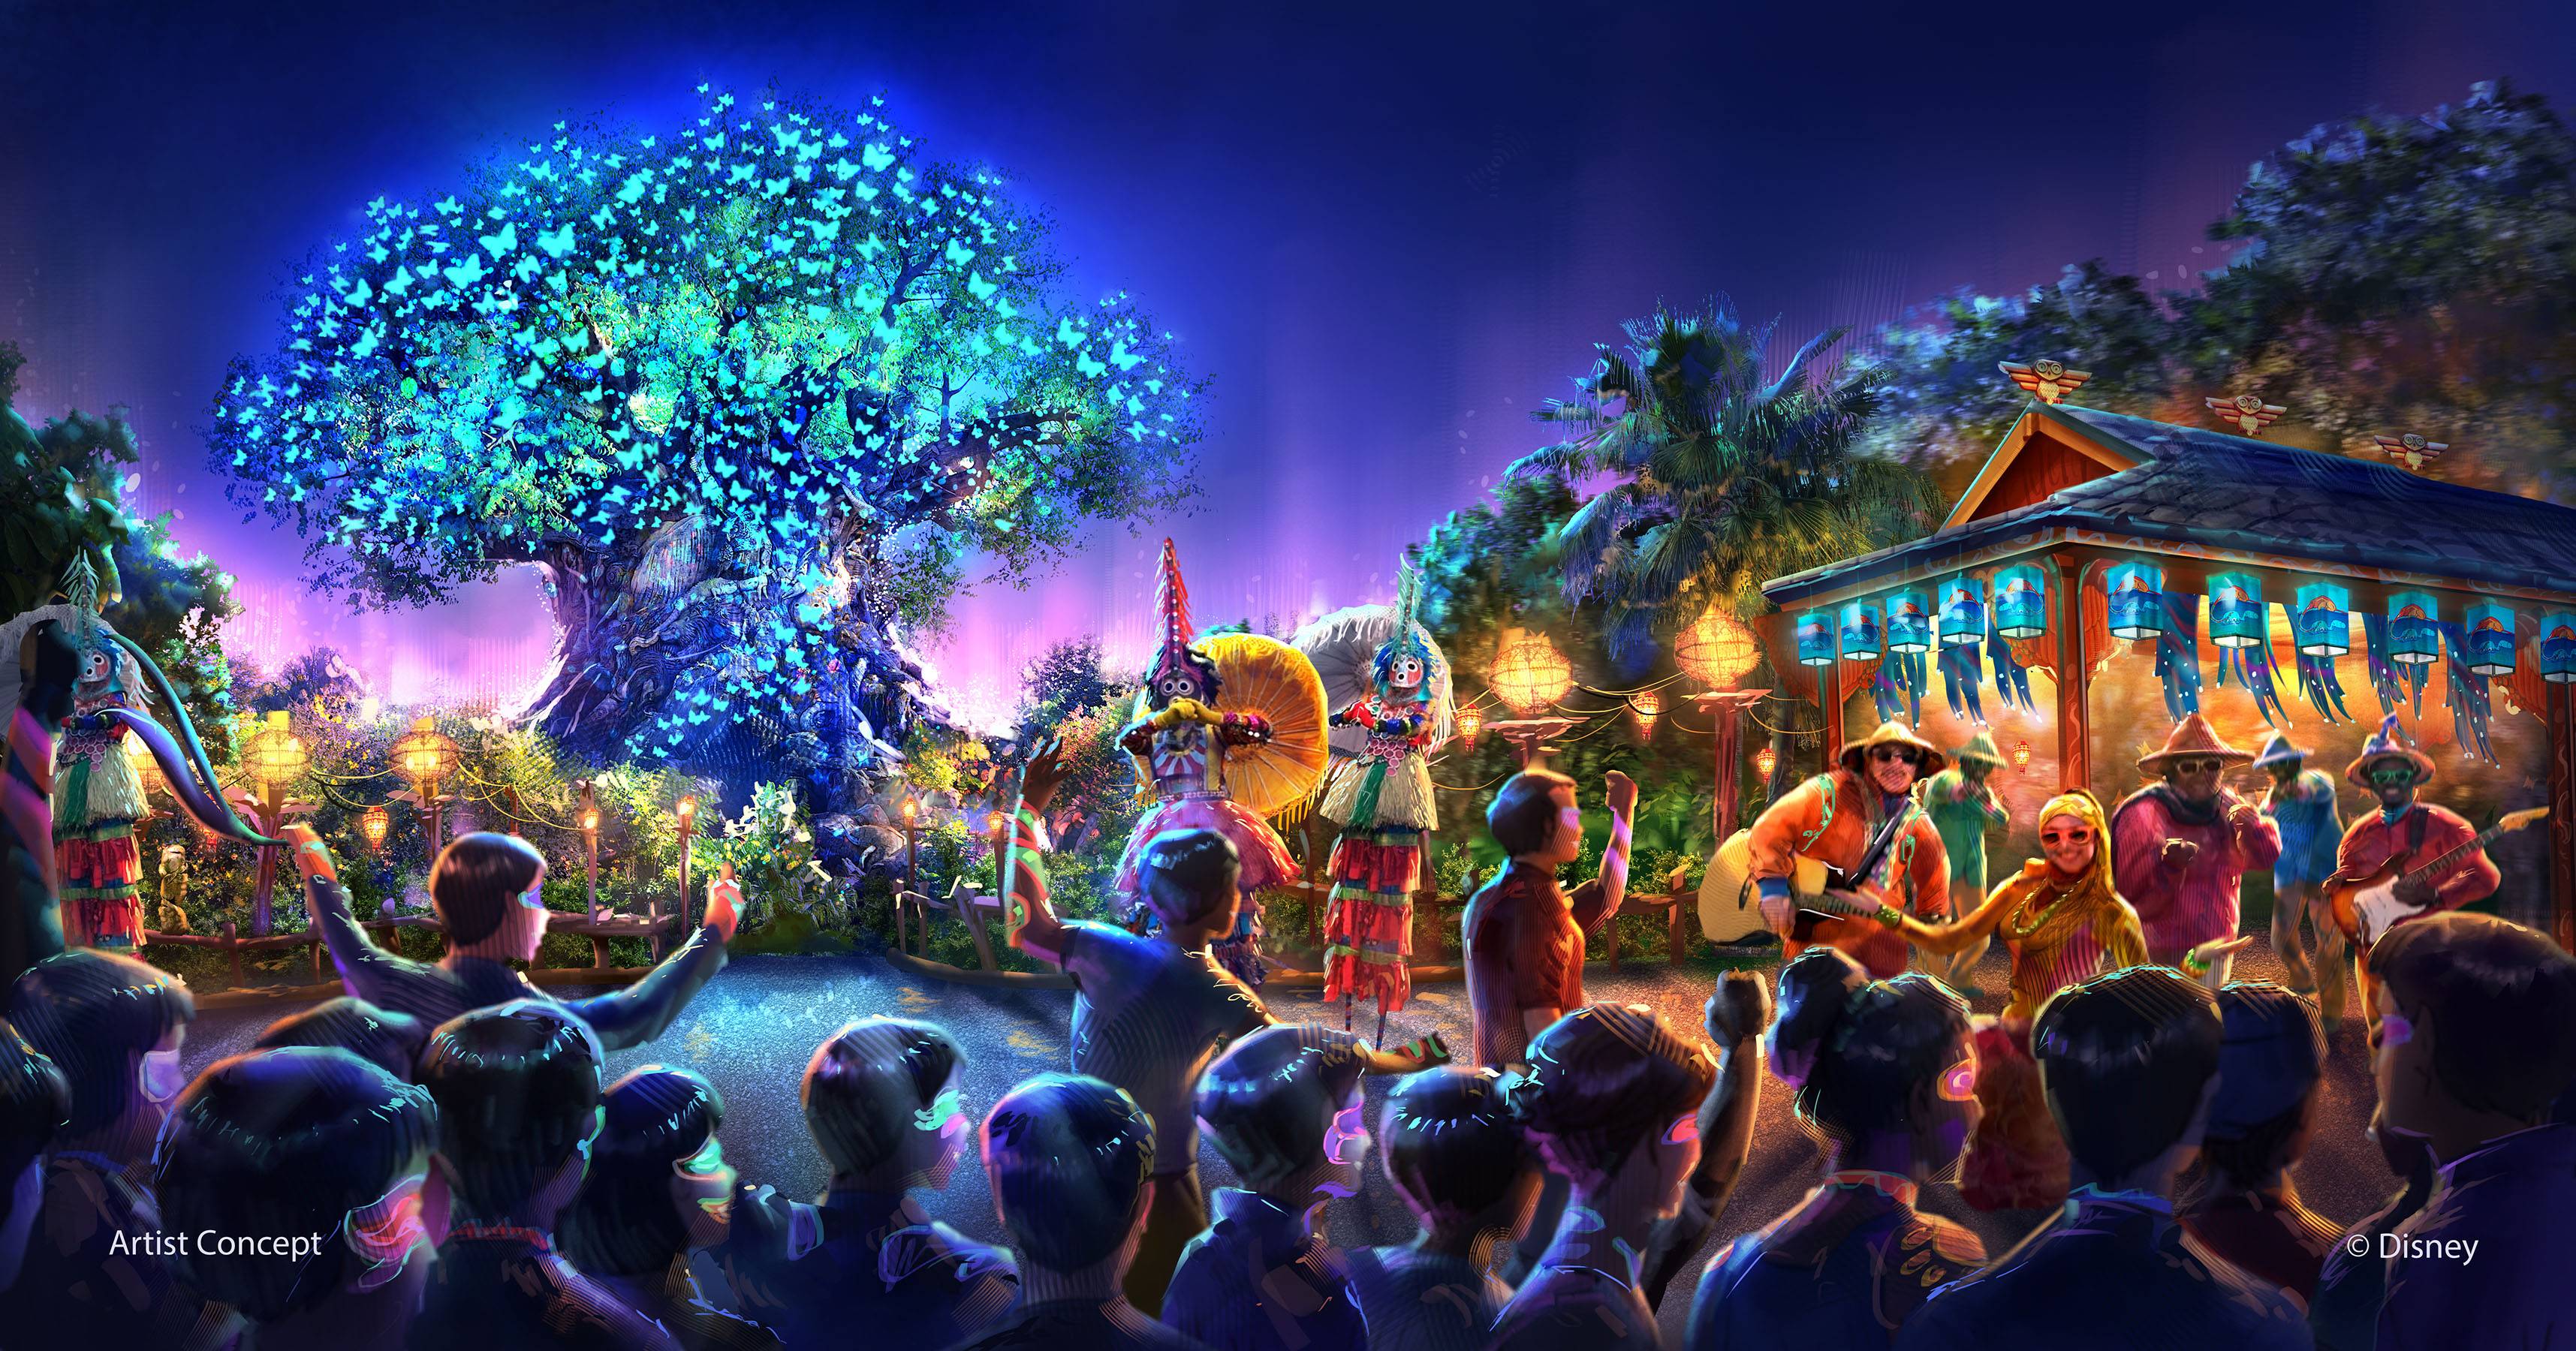 New nighttime entertainment coming to Disney's Animal Kingdom